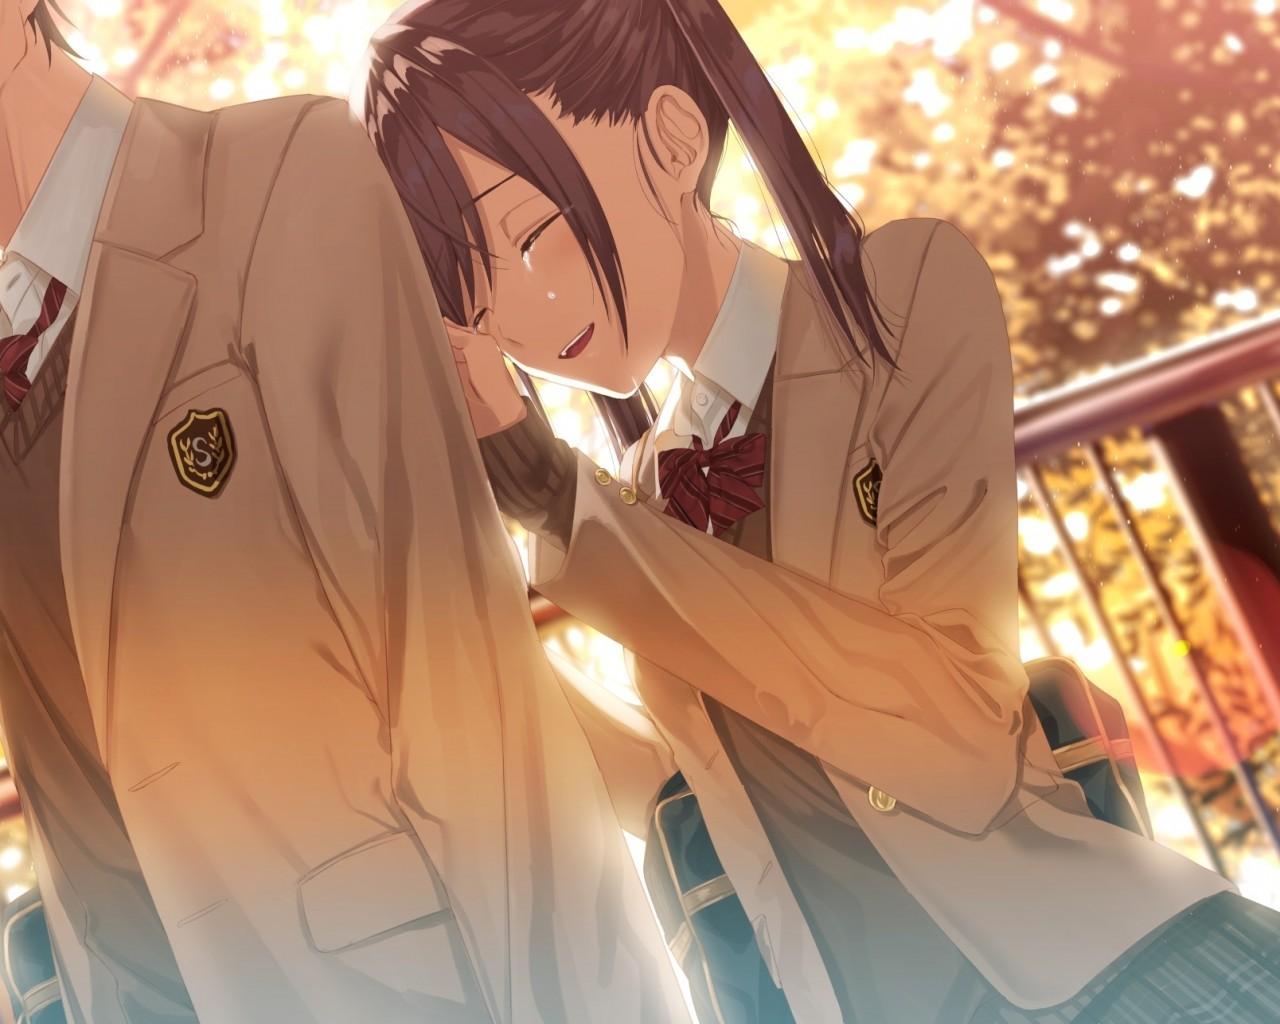 Download 1280x1024 Anime Couple, Crying, Tears, Romance